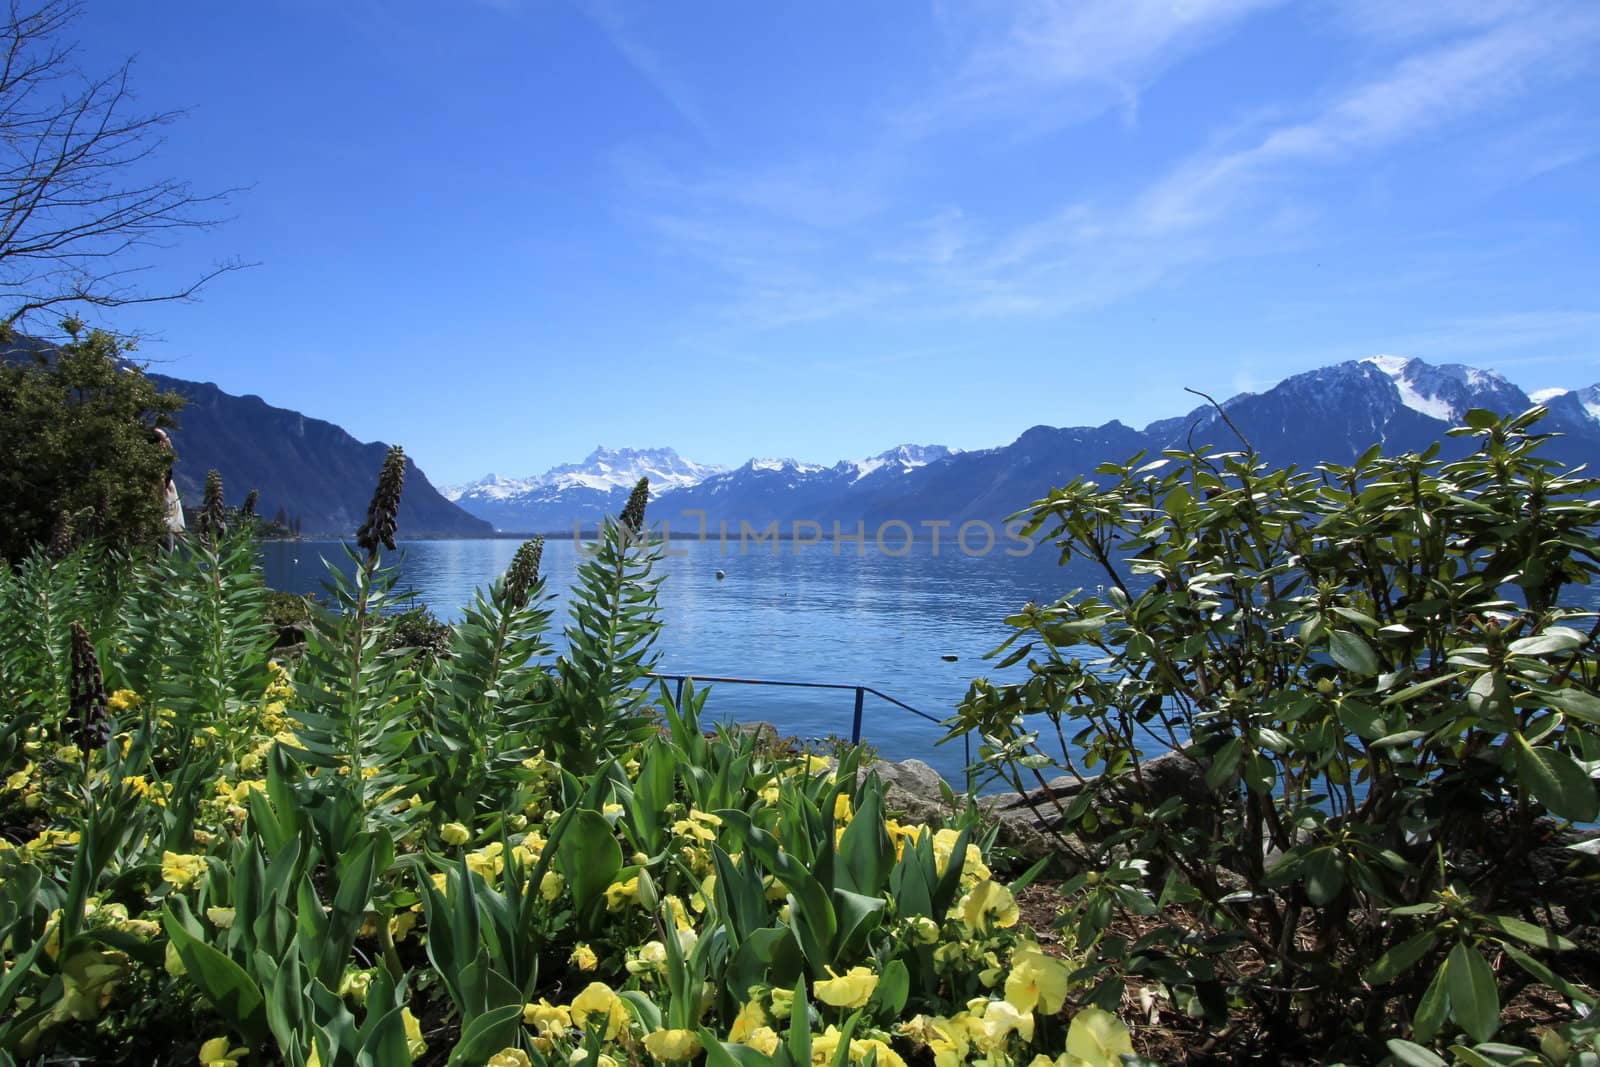 Springtime at Geneva lake, Montreux, Switzerland by Elenaphotos21